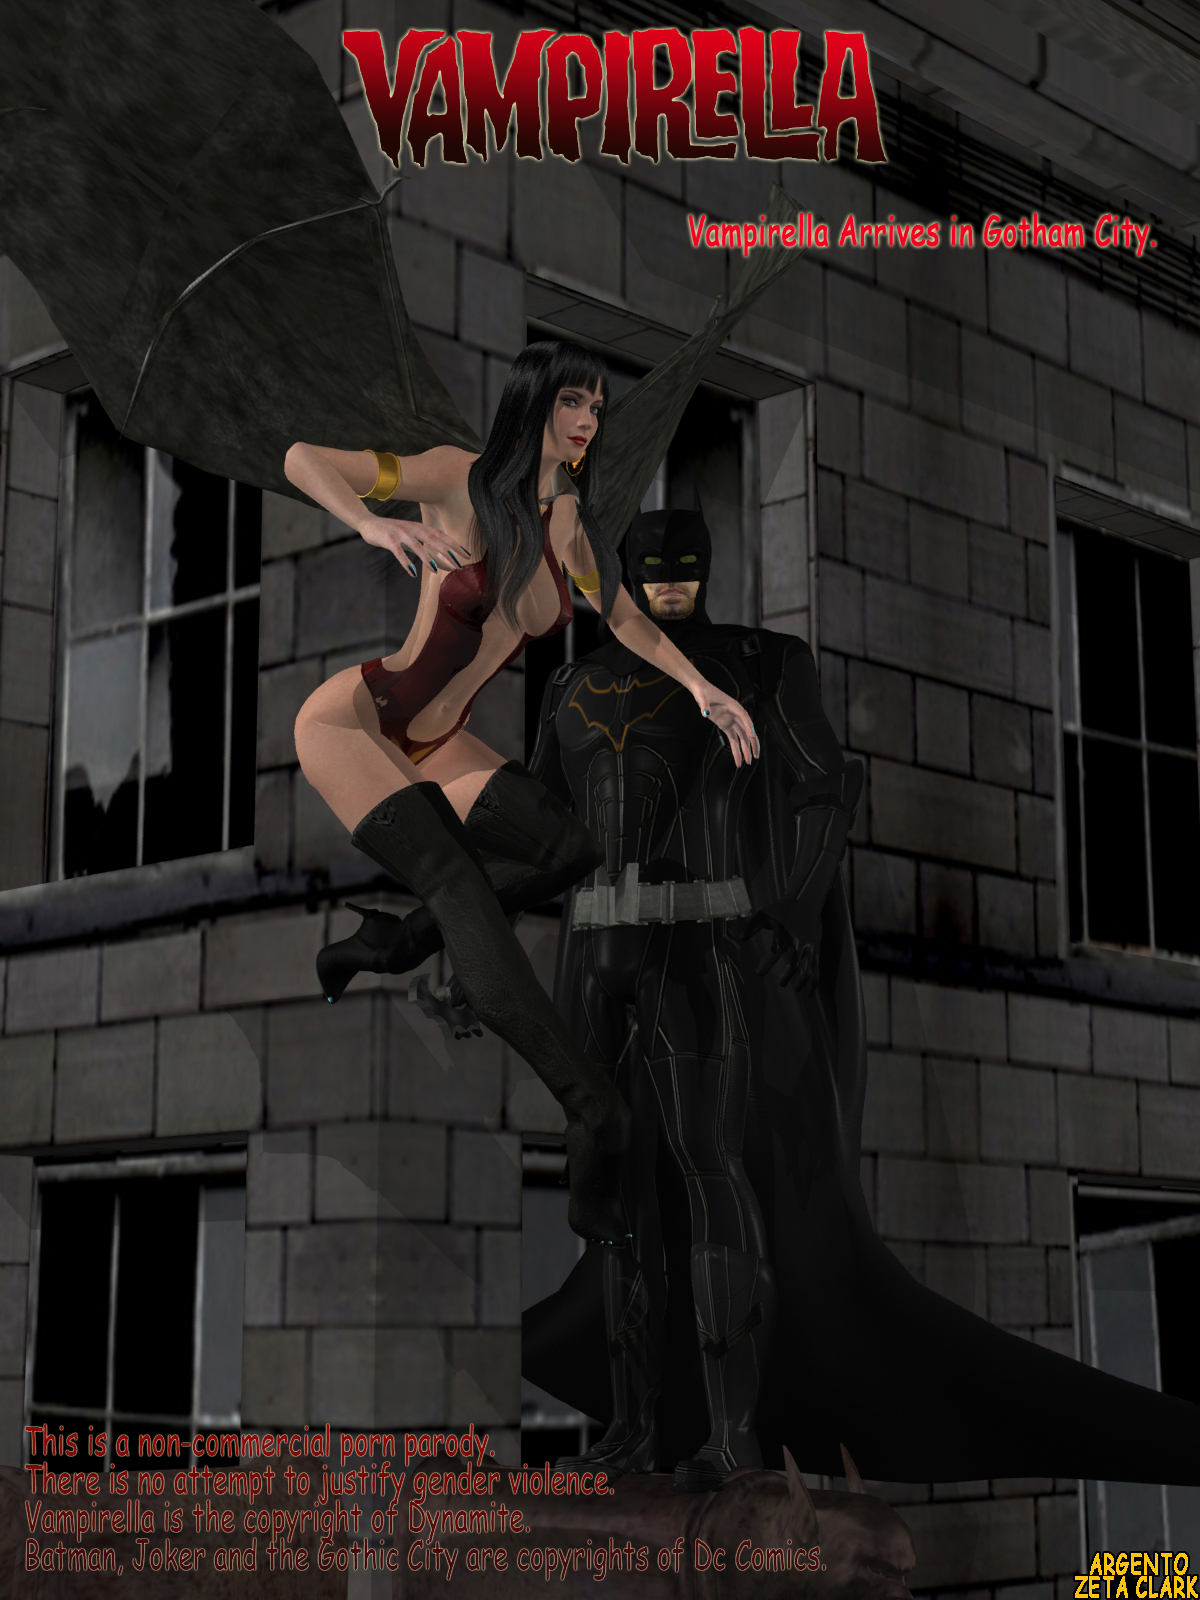 Argento - Vampirella Arrives in Gotham City